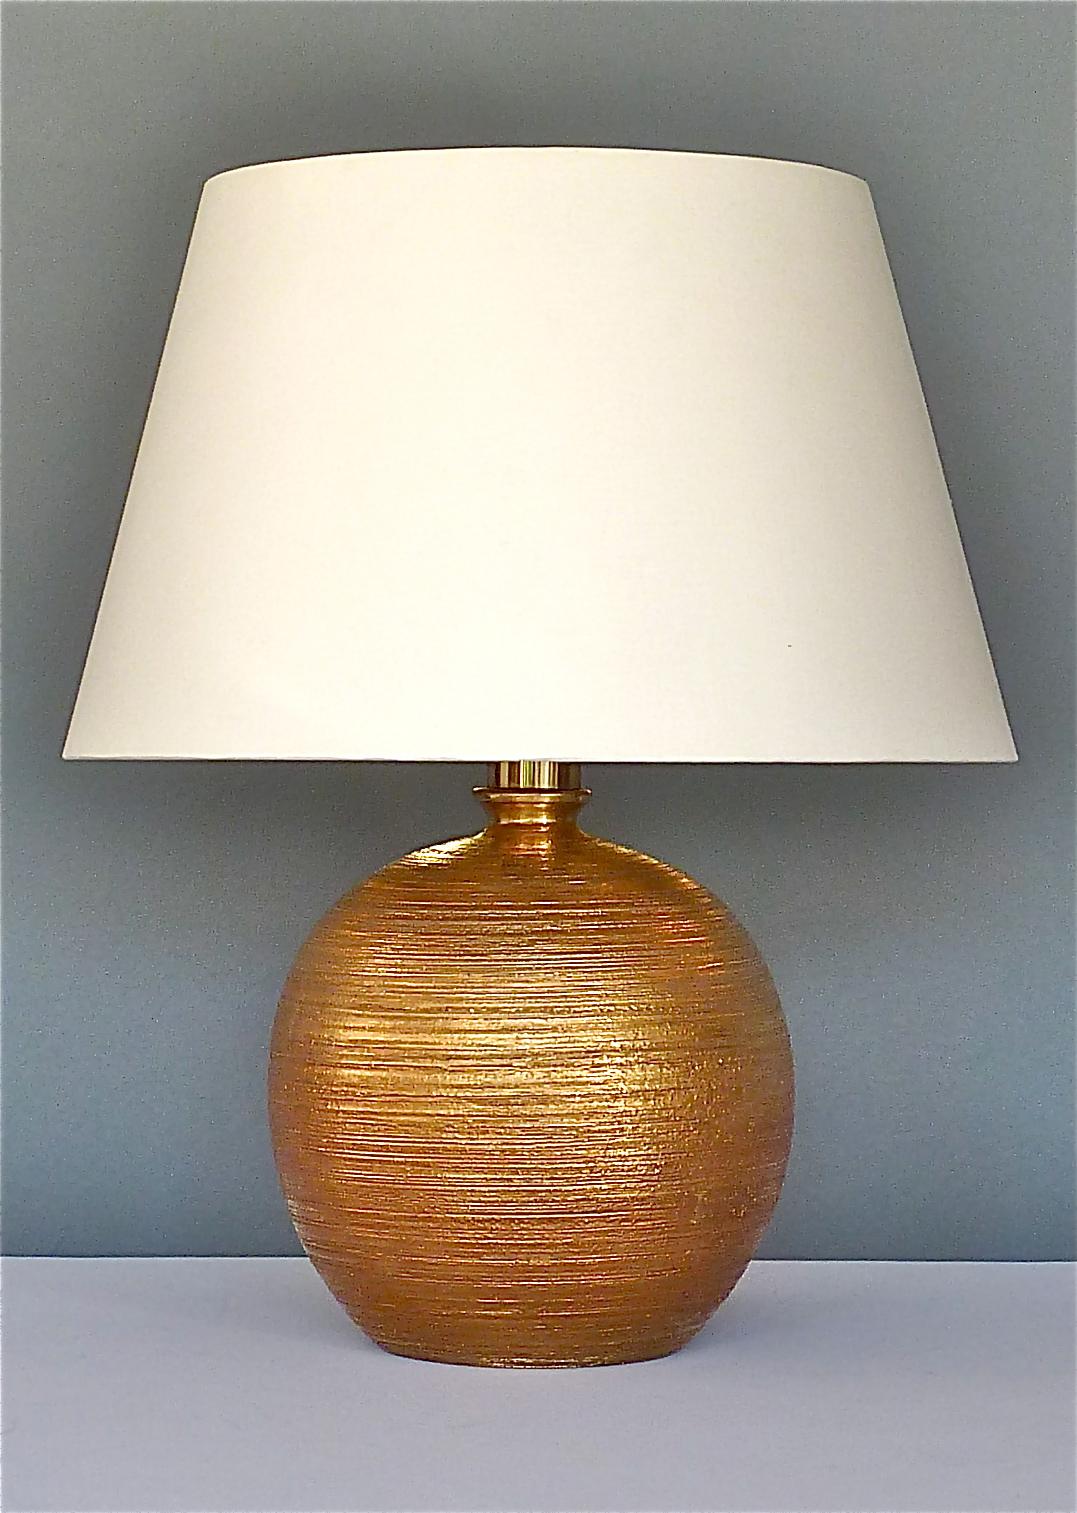 Large Rare Italian Gold Ceramic Bitossi Table Lamp for Bergboms 1950s Sweden  For Sale 1